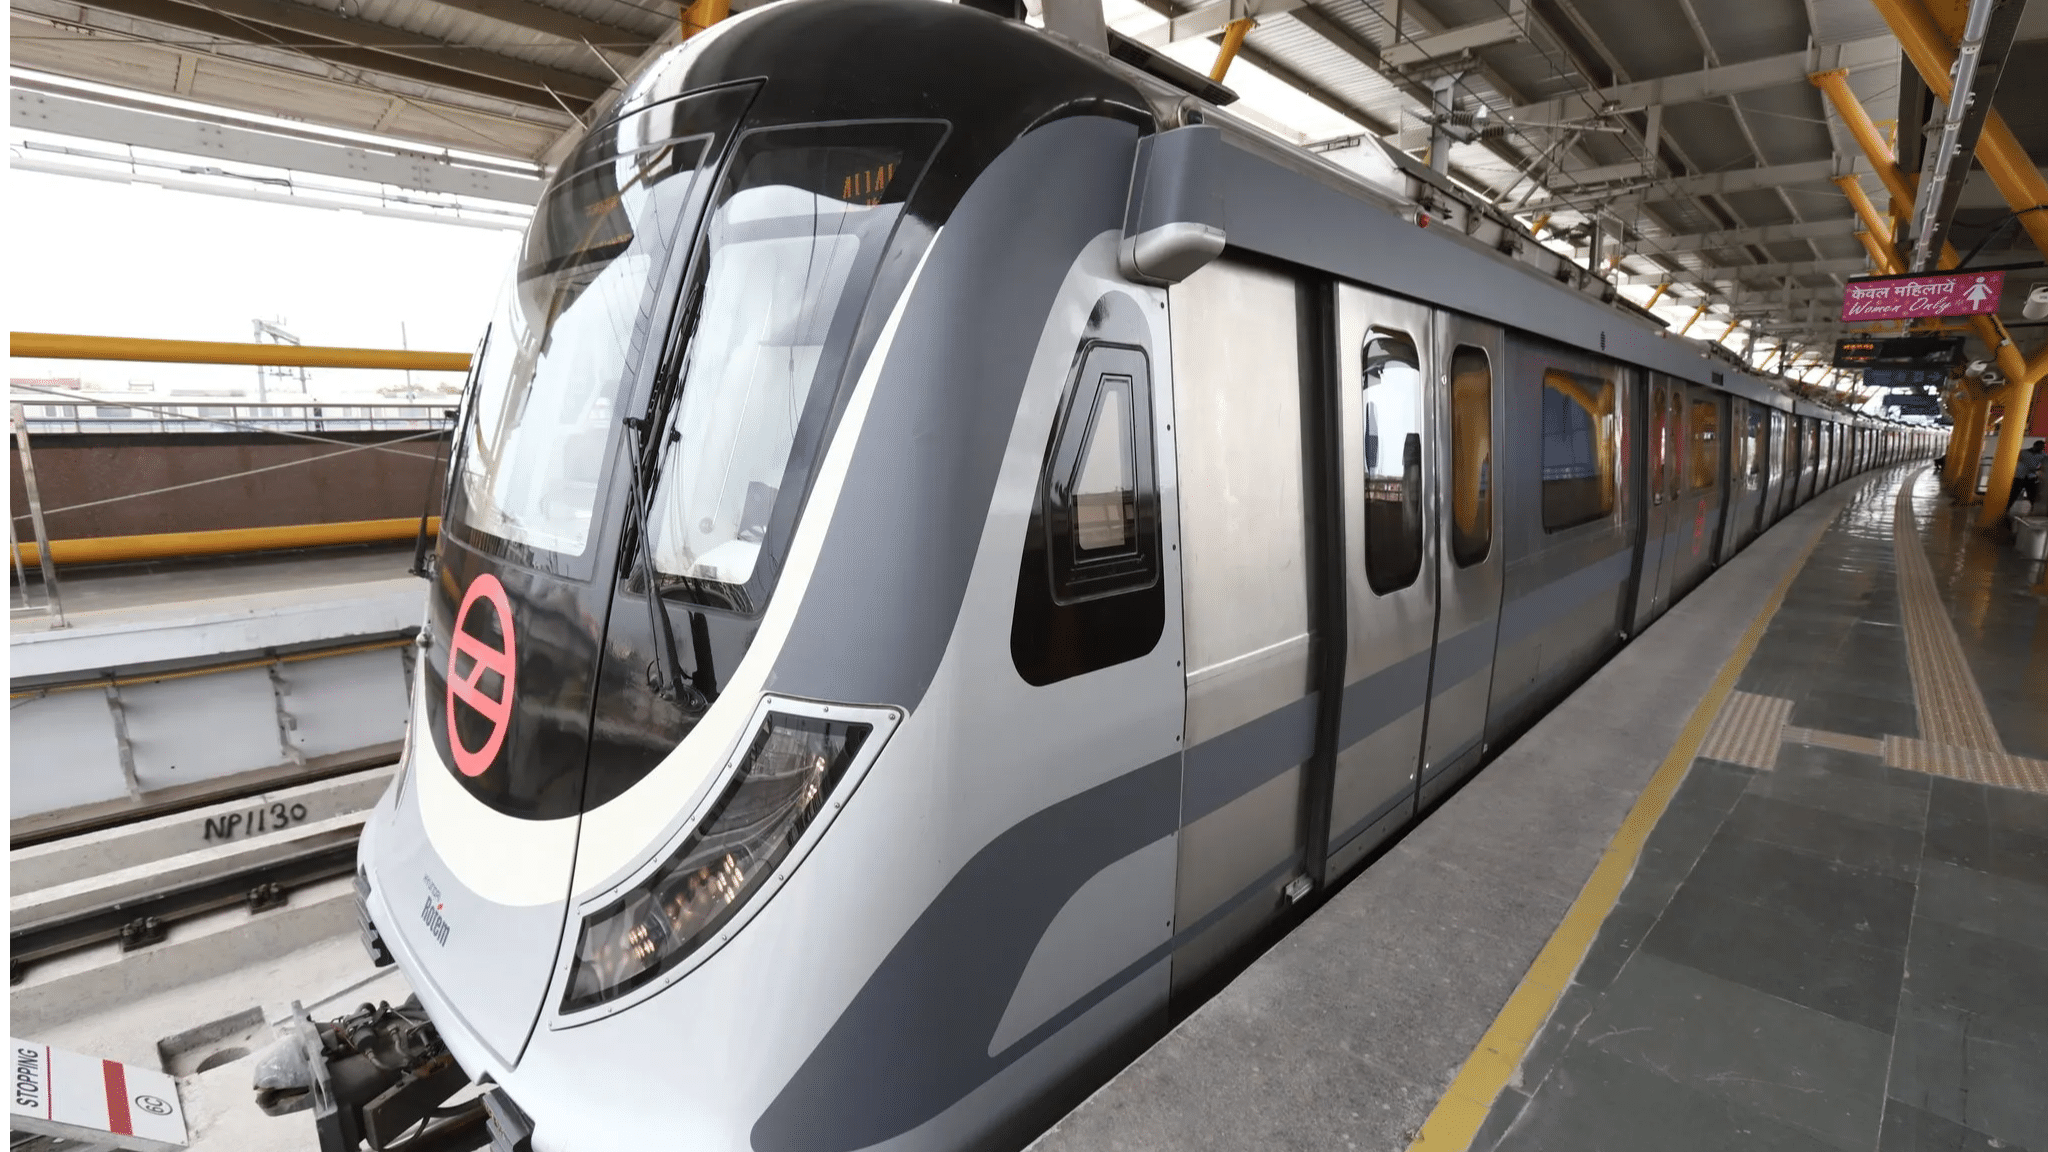 DMRC revises Delhi Metro schedule: Check updated timetable